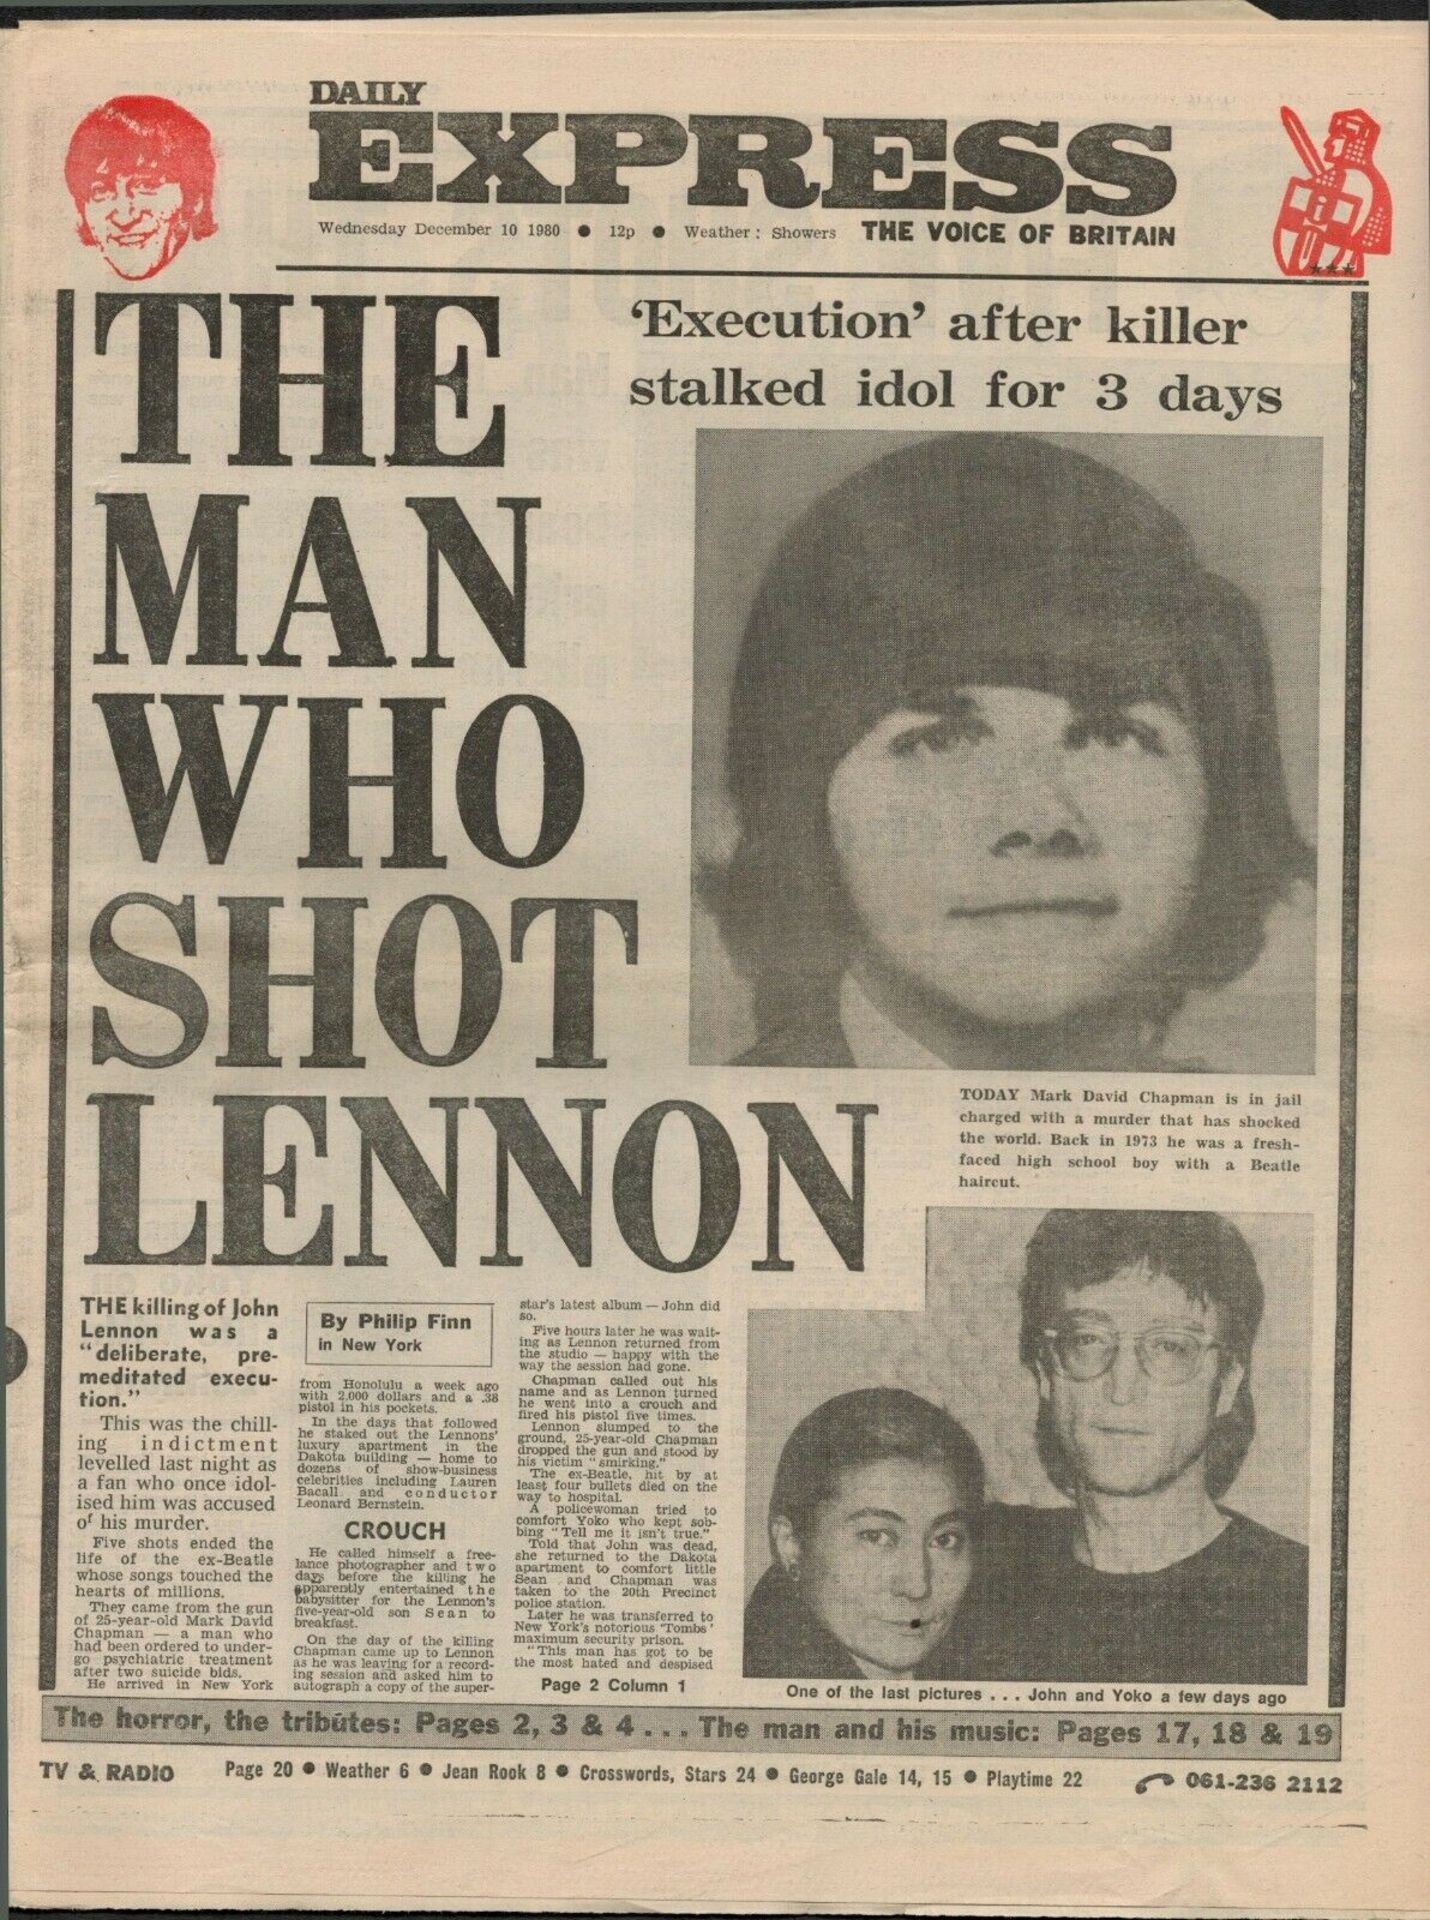 Beatles 1980 Newspaper 'Beatles The Man Who Lennon Dead'